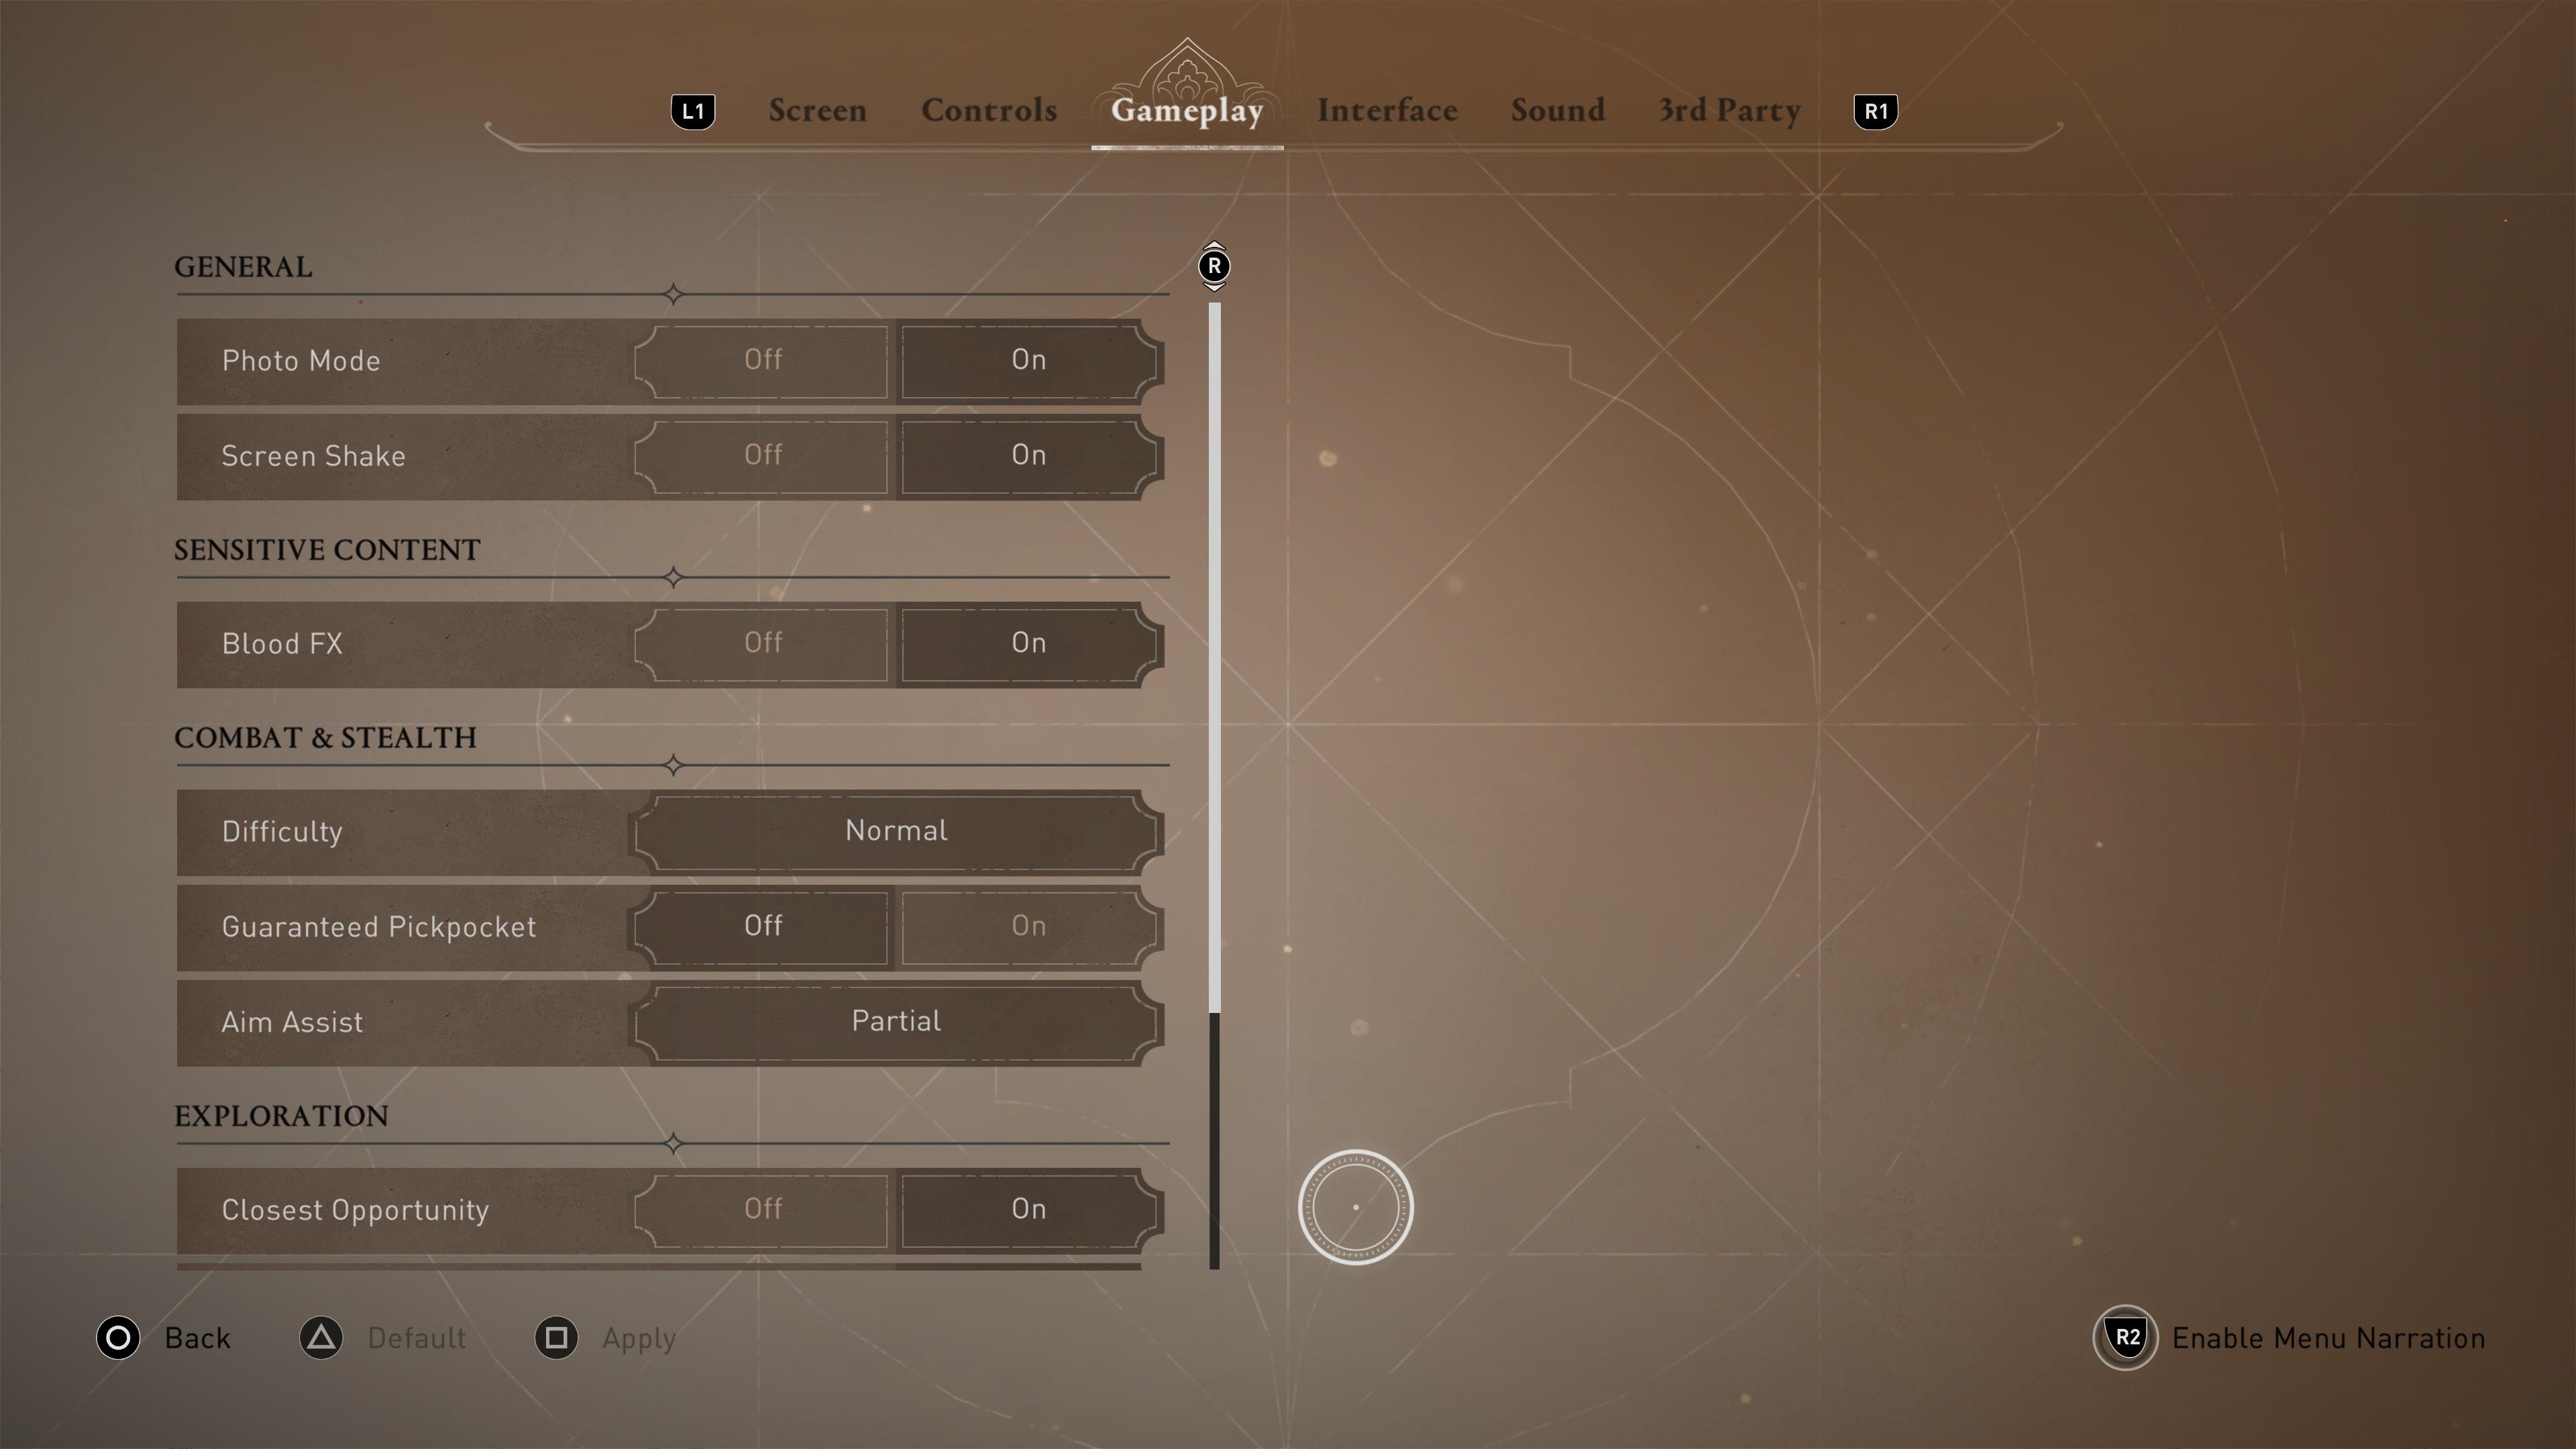 Screenshots of menus from Assassin's Creed Mirage